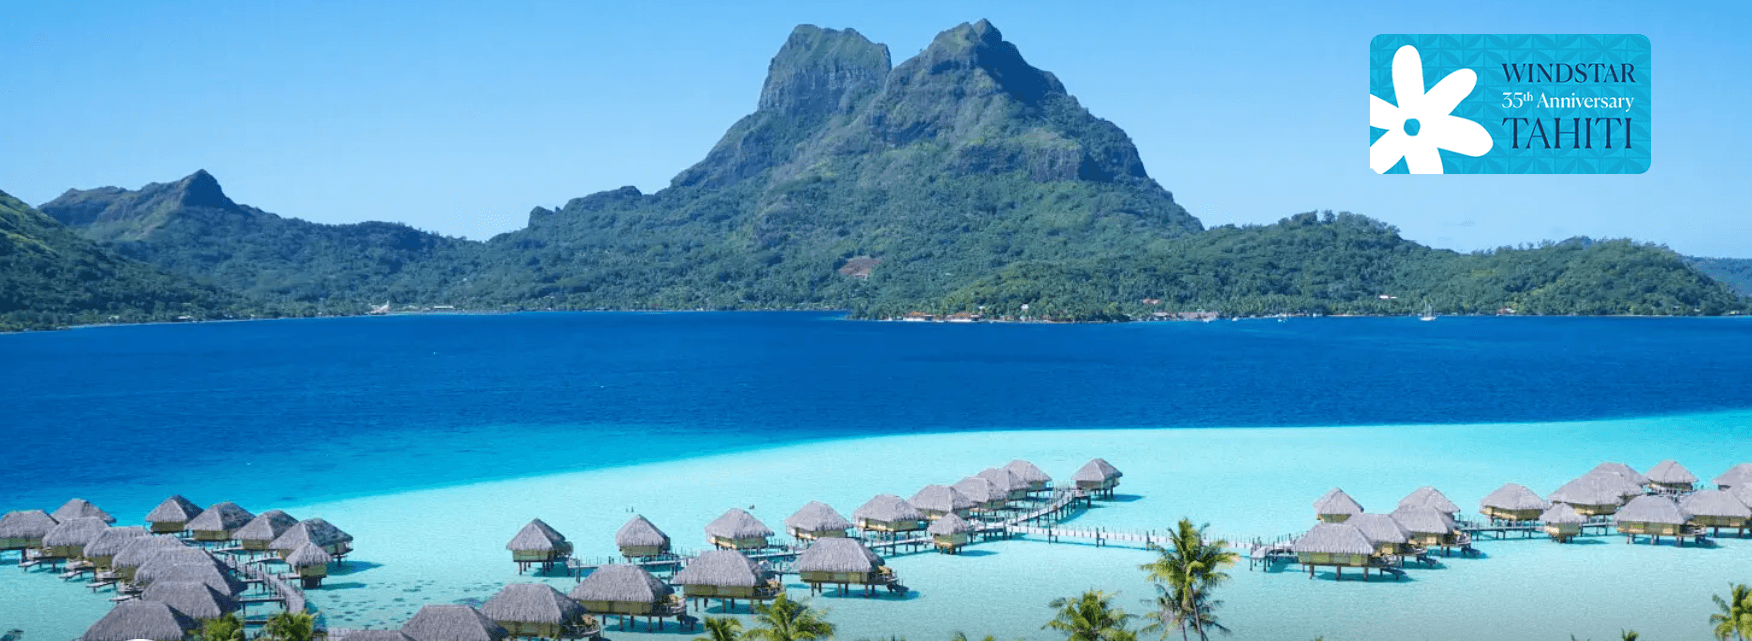 Dreams of Tahiti with Windstar Cruise